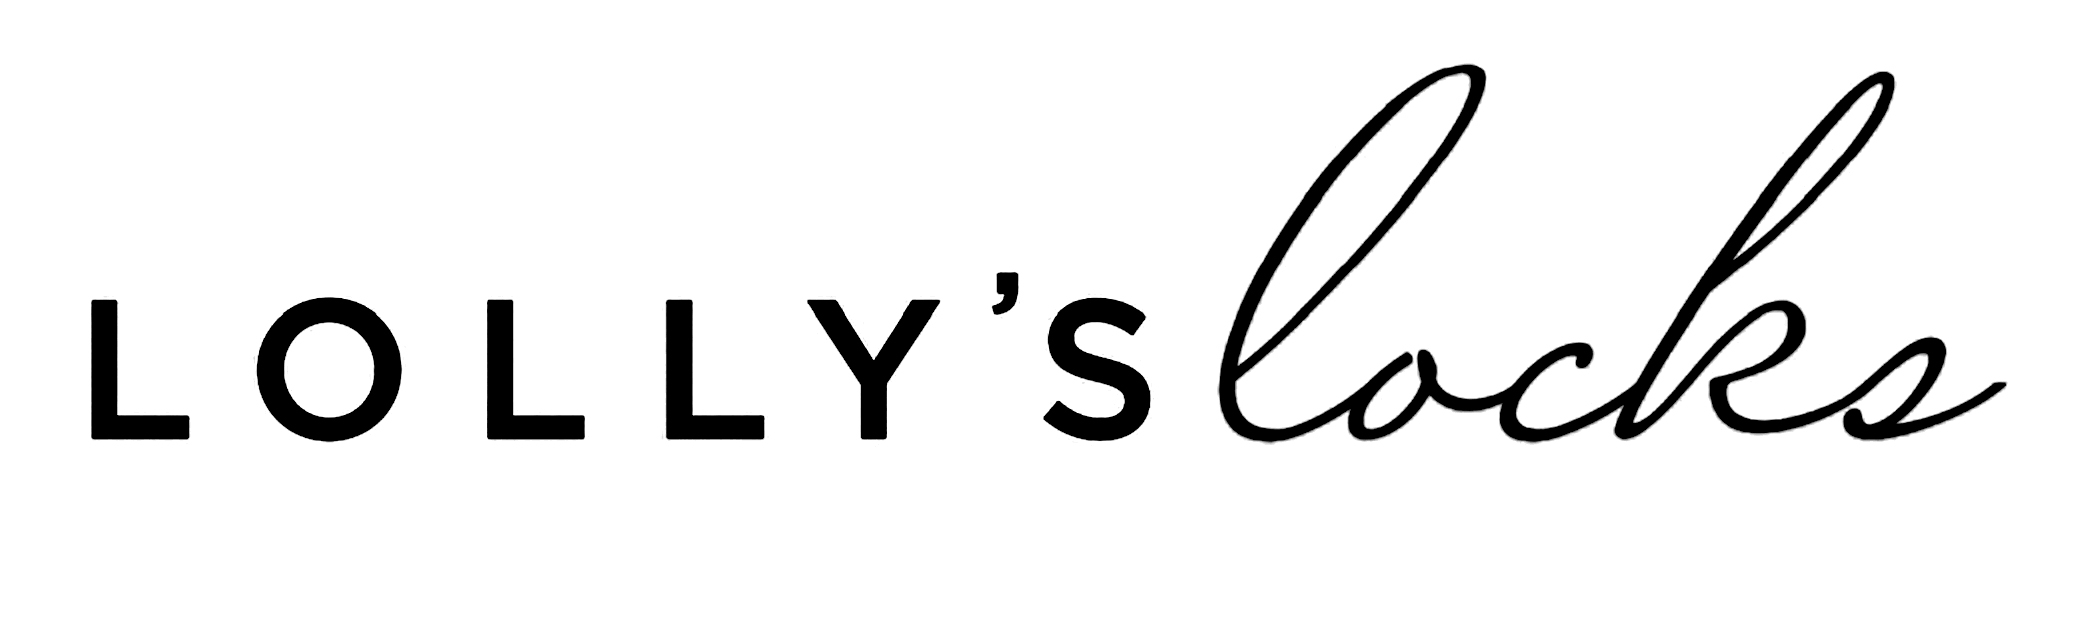 lollys locks logo.jpg